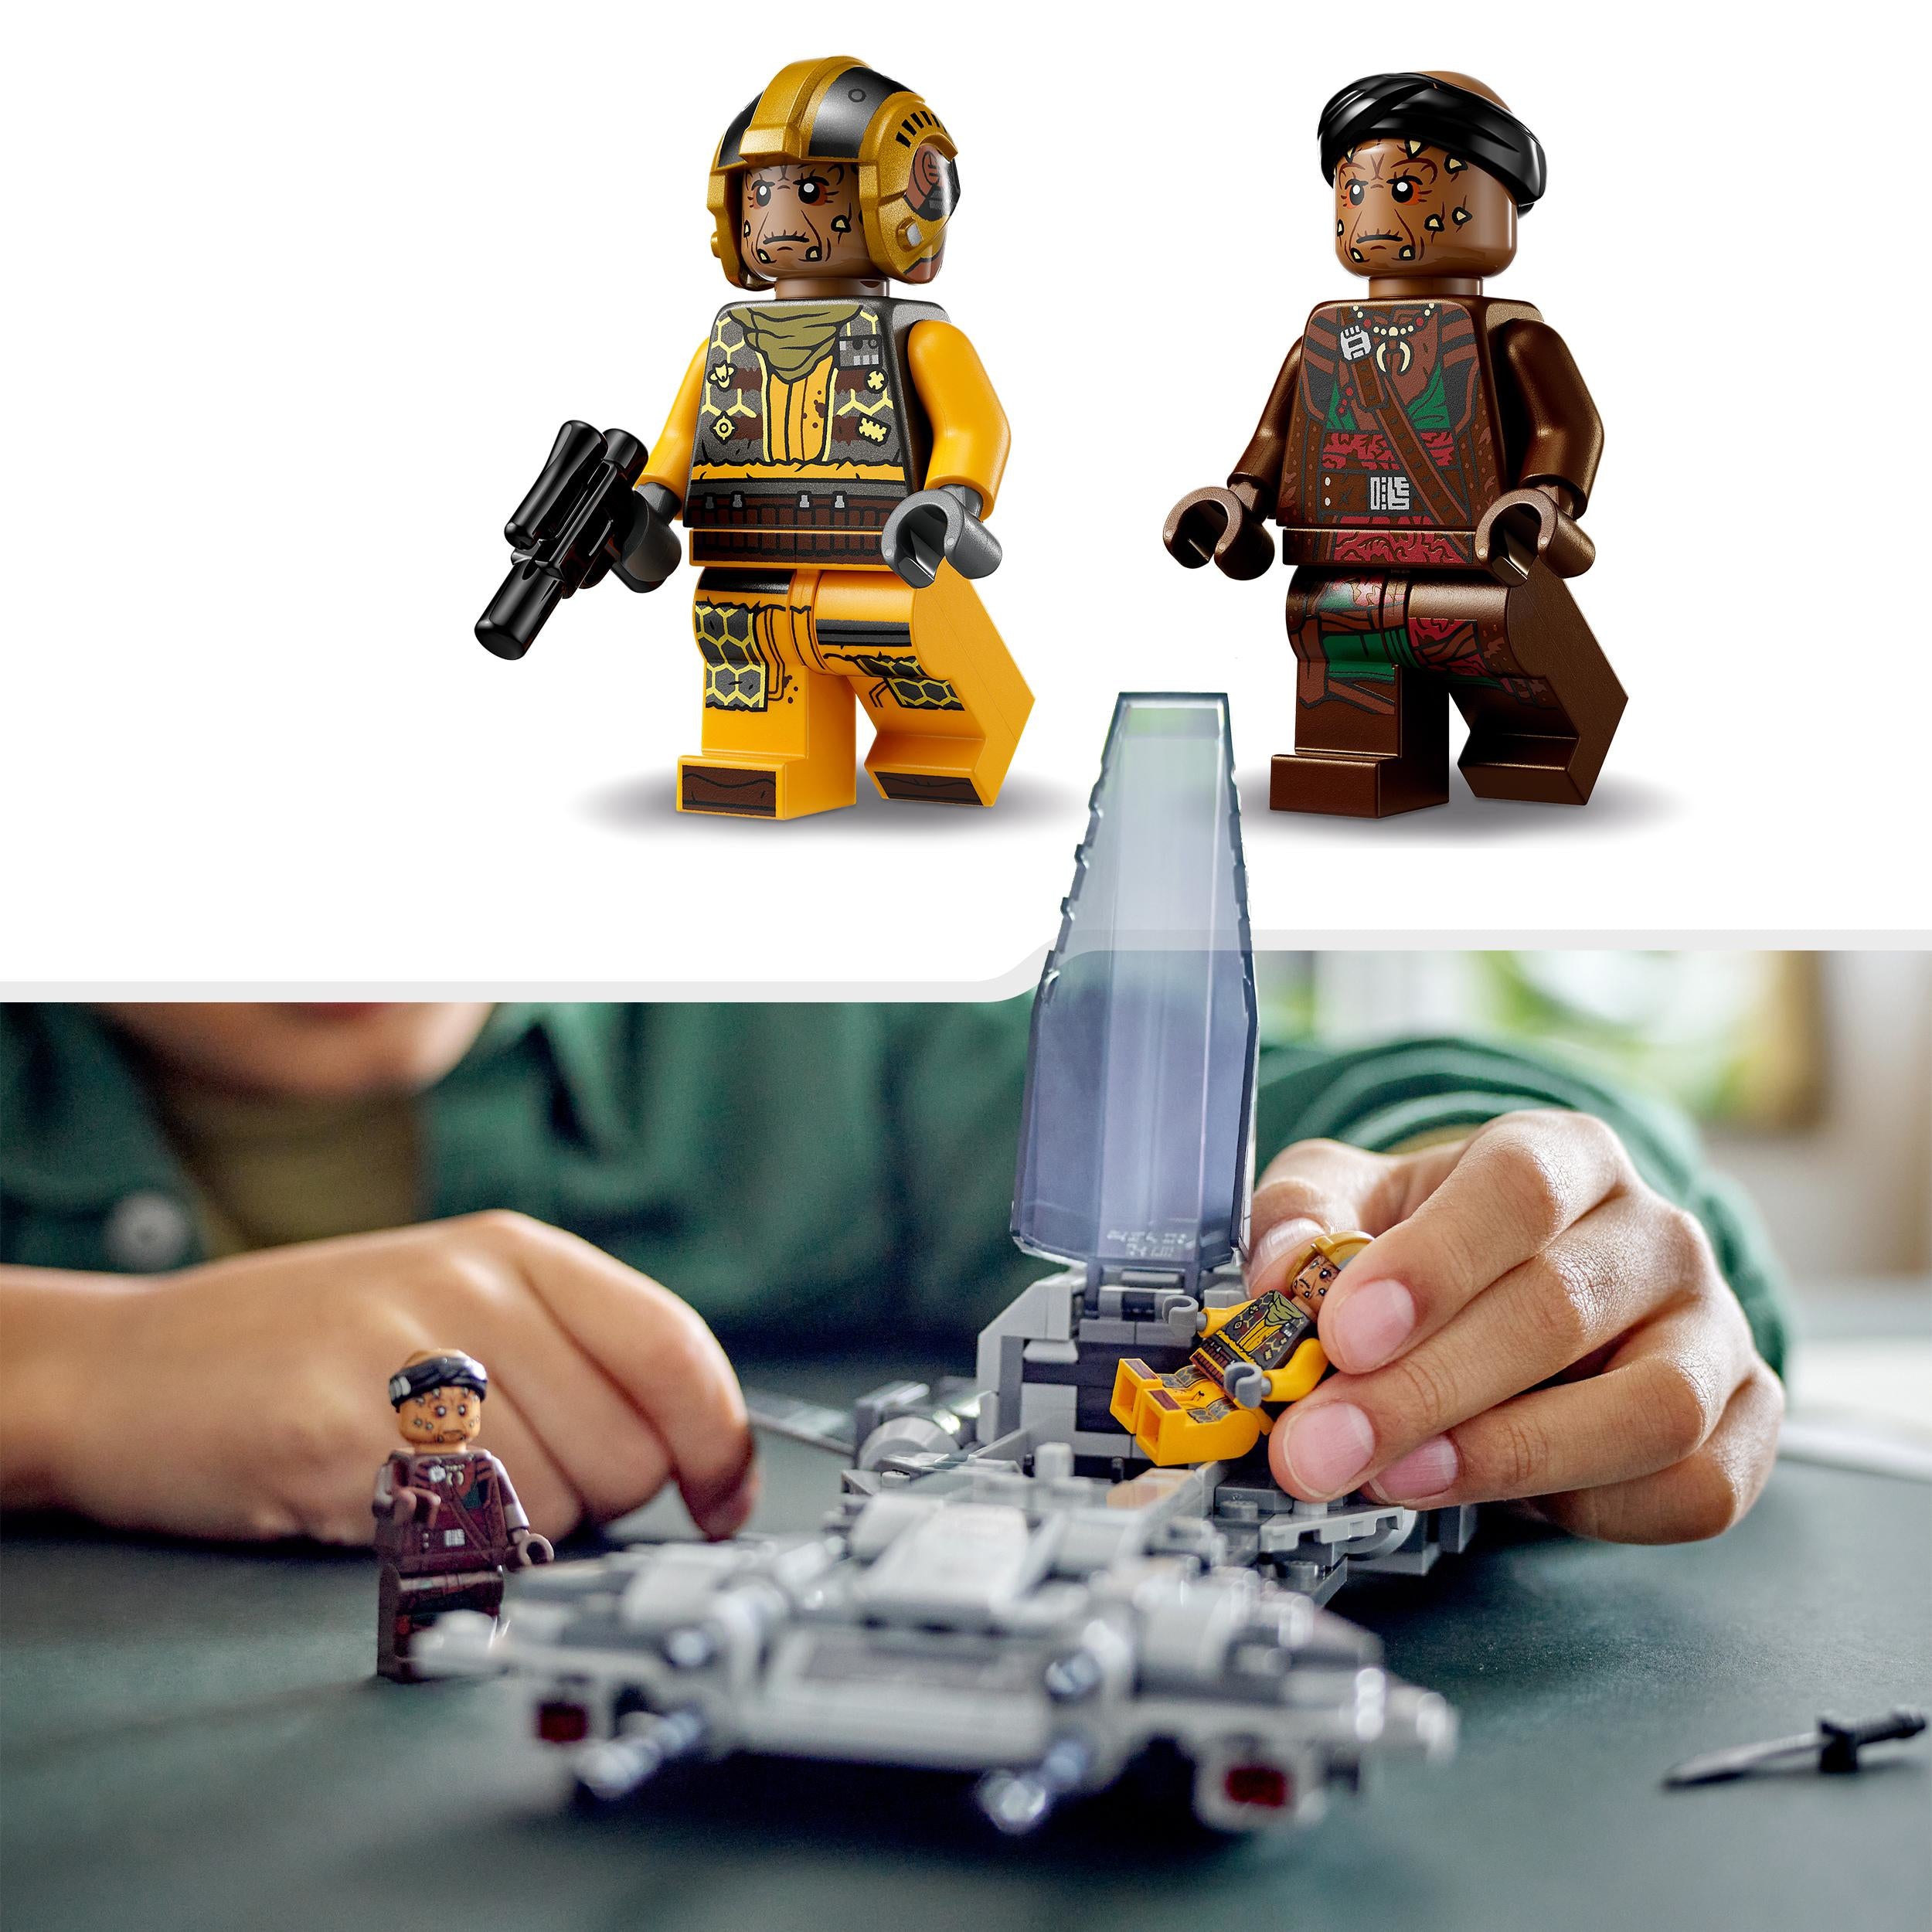 75346 - LEGO Star Wars  - Pirata Snub Fighter